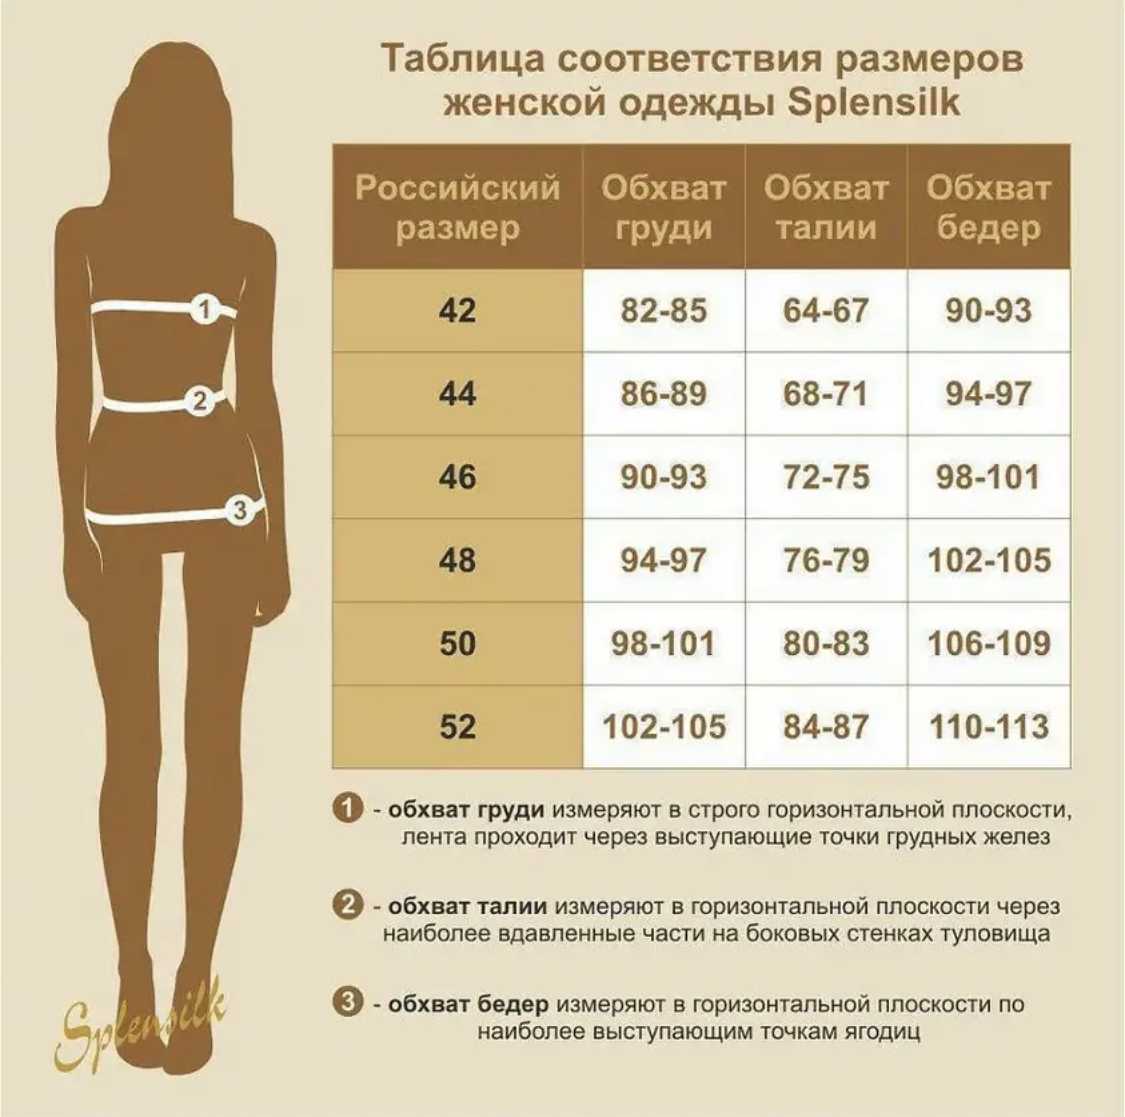 Блица размеров. Таблица размеров. Таблица размеров женской одежды. Таблица размеров одежды для женщин. Размеры одежды женской.